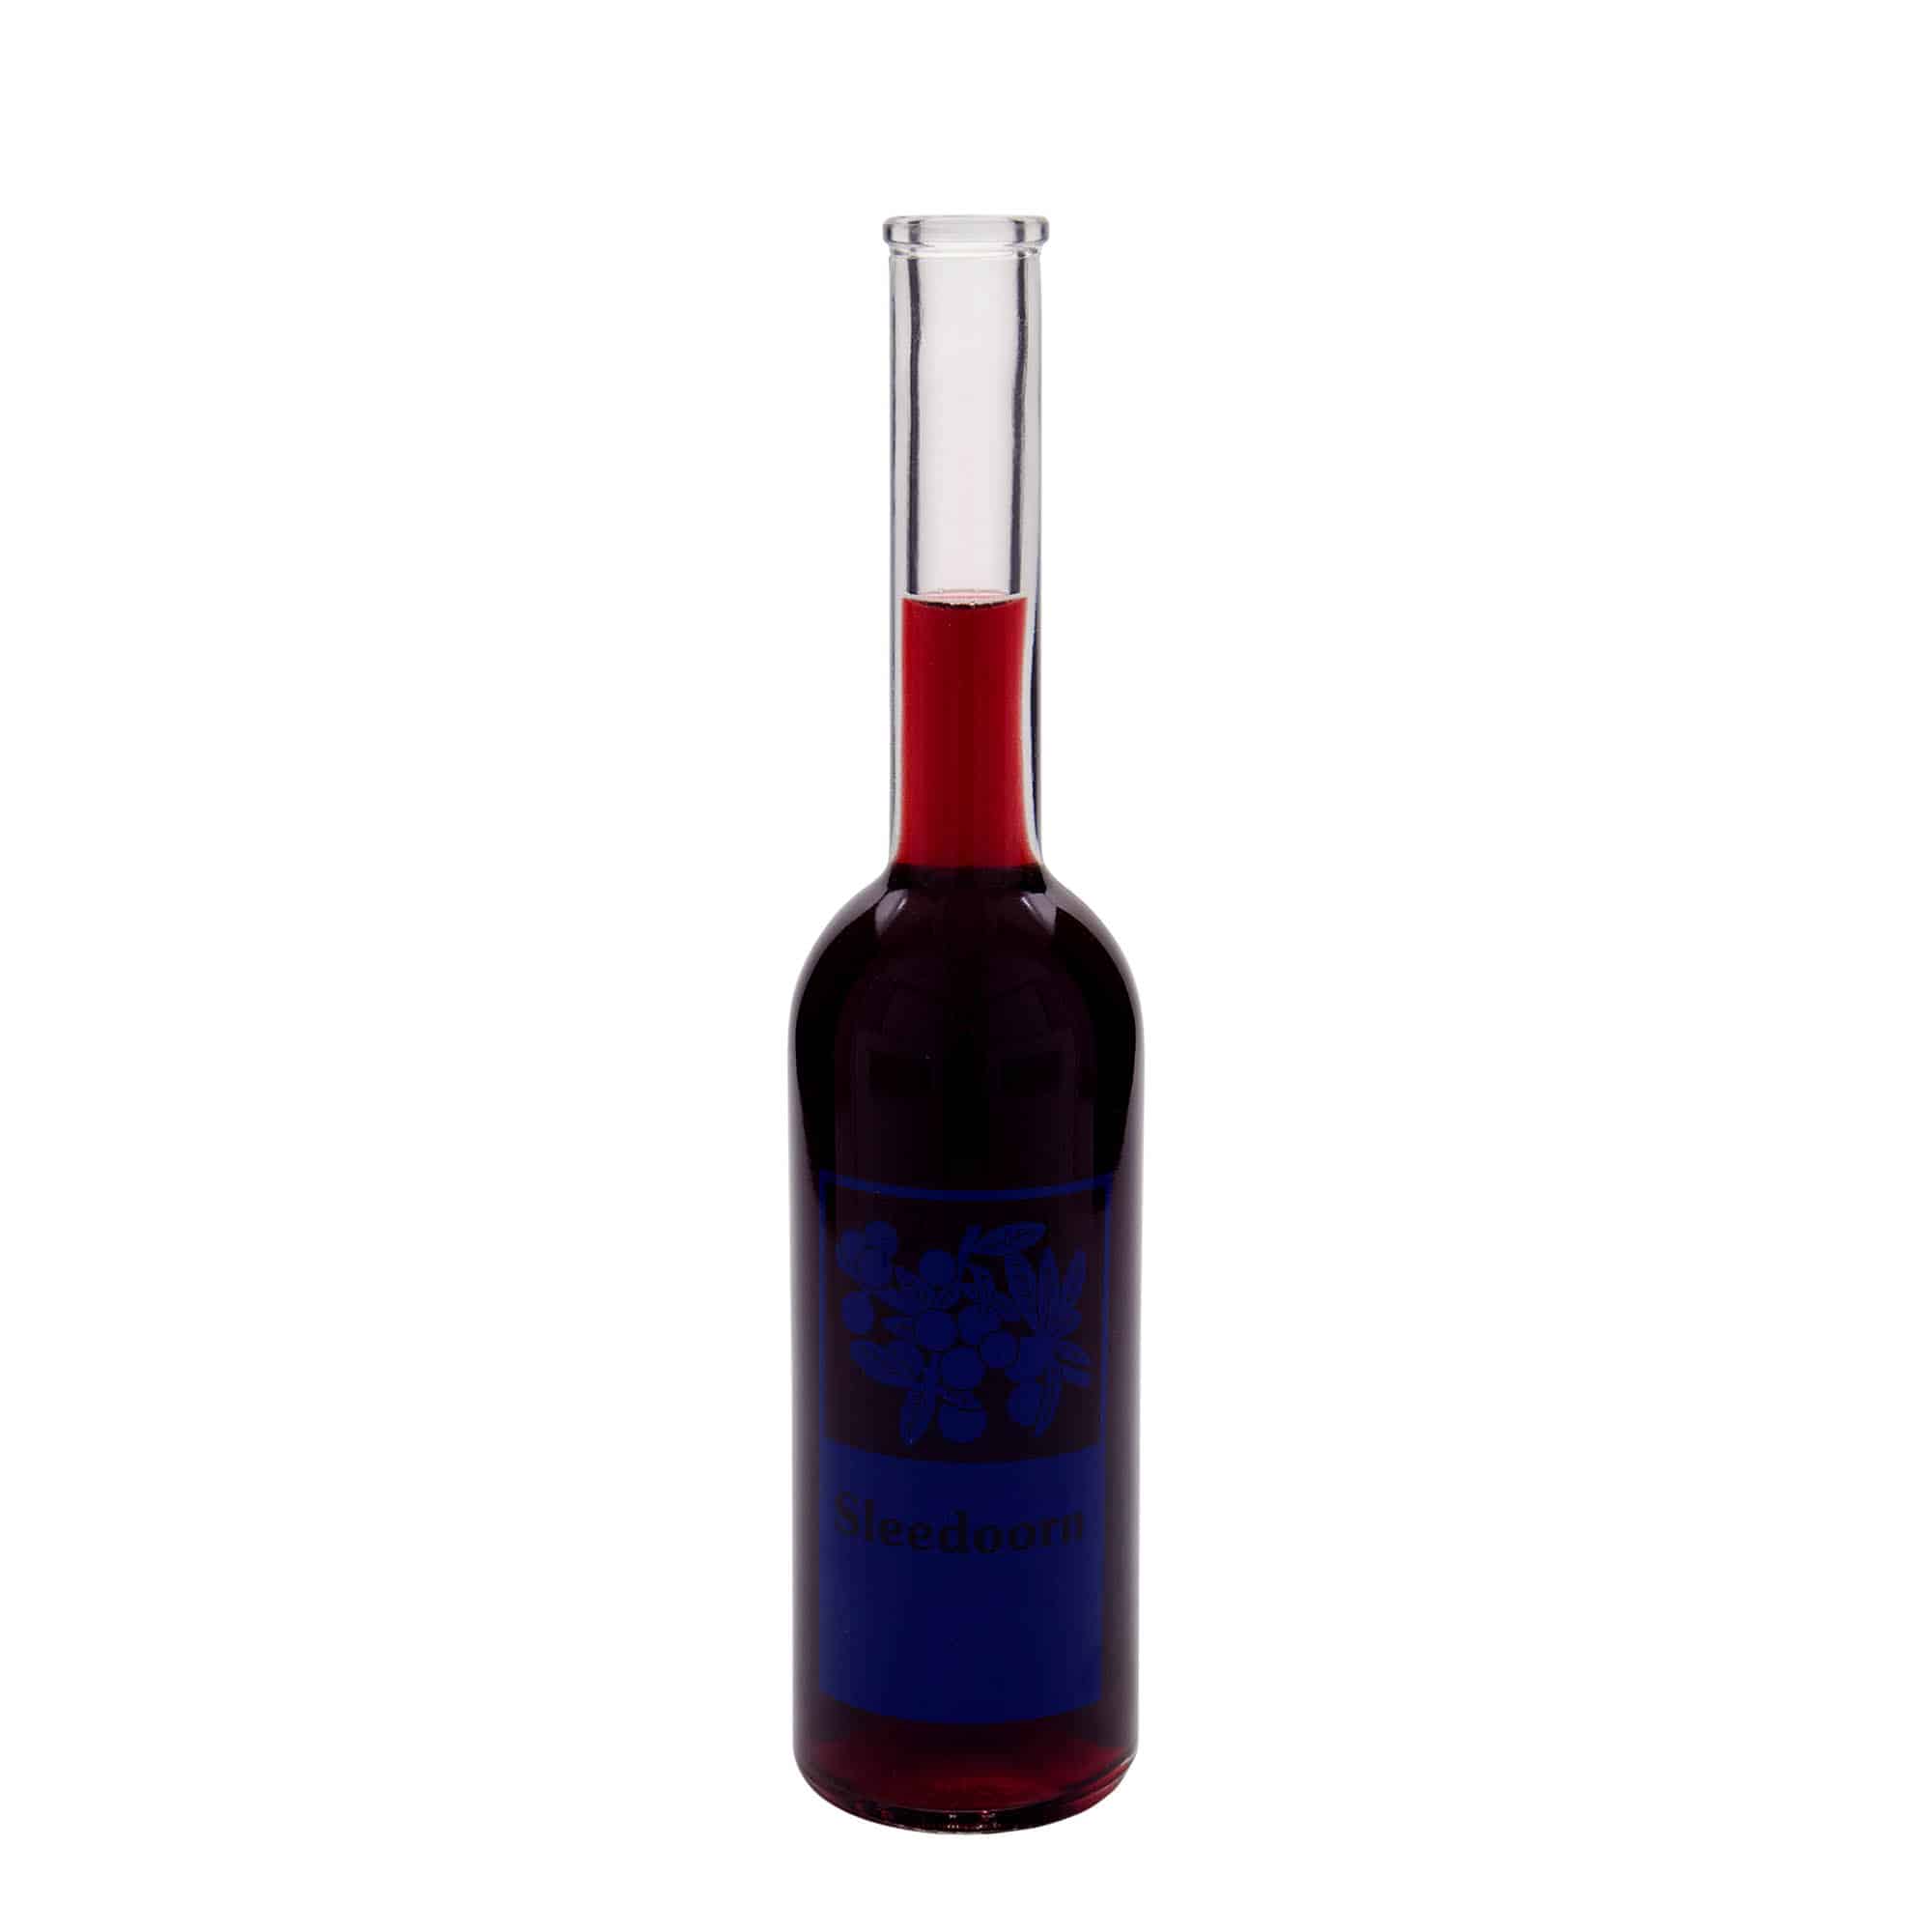 500 ml glass bottle 'Opera', print: Sleedoorn, closure: cork